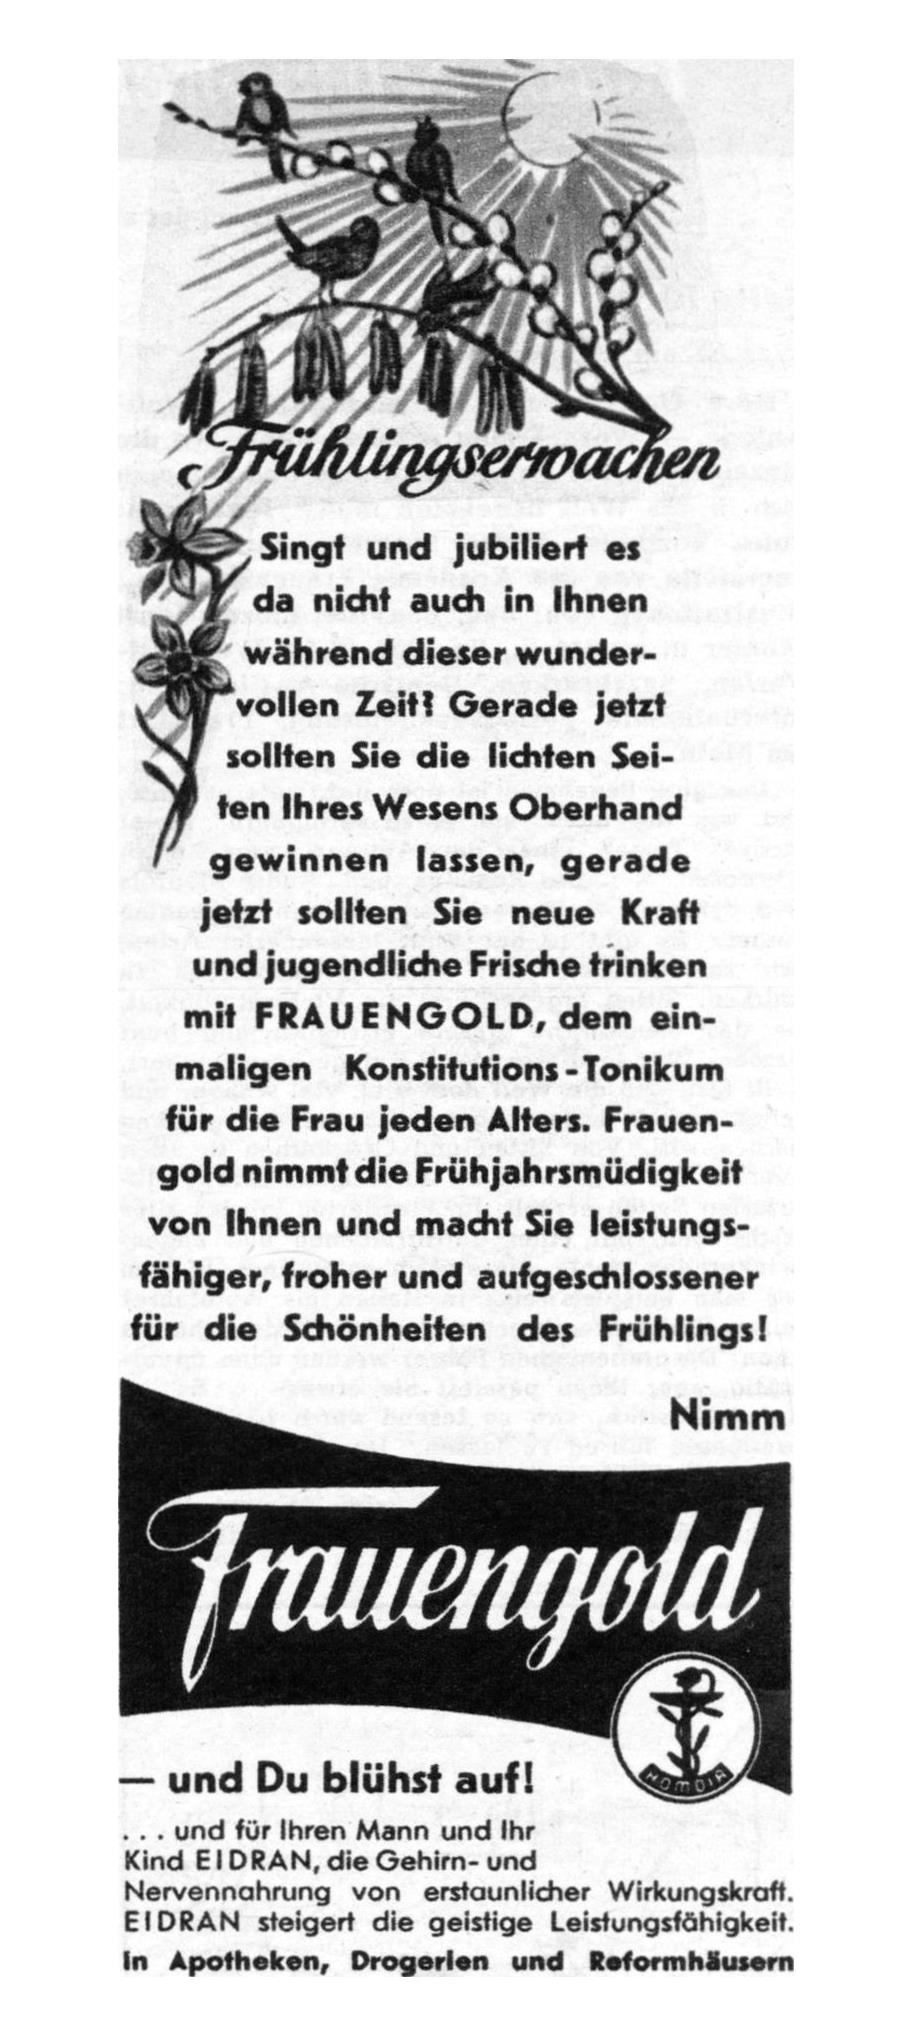 Frauengold 1954 0.jpg